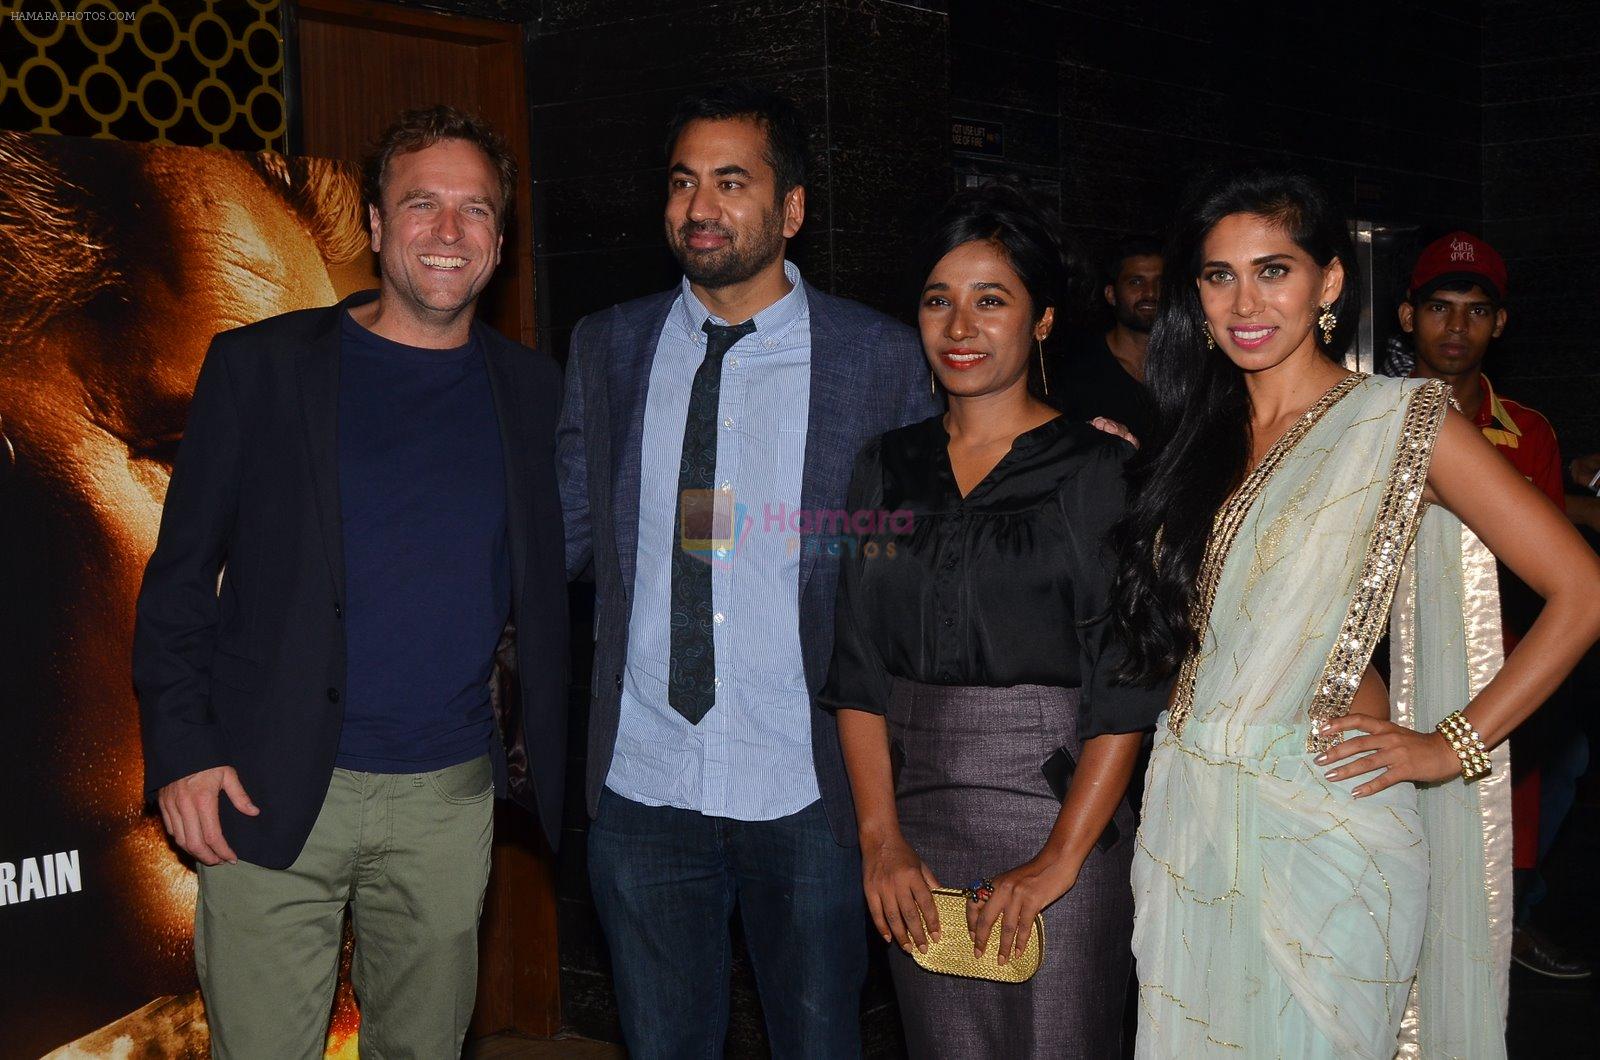 David Brooks, Tannishtha Chatterjee, Kal Penn, Fagun Thakrar  at Bhopal film premiere in Mumbai on 4th Dec 2014